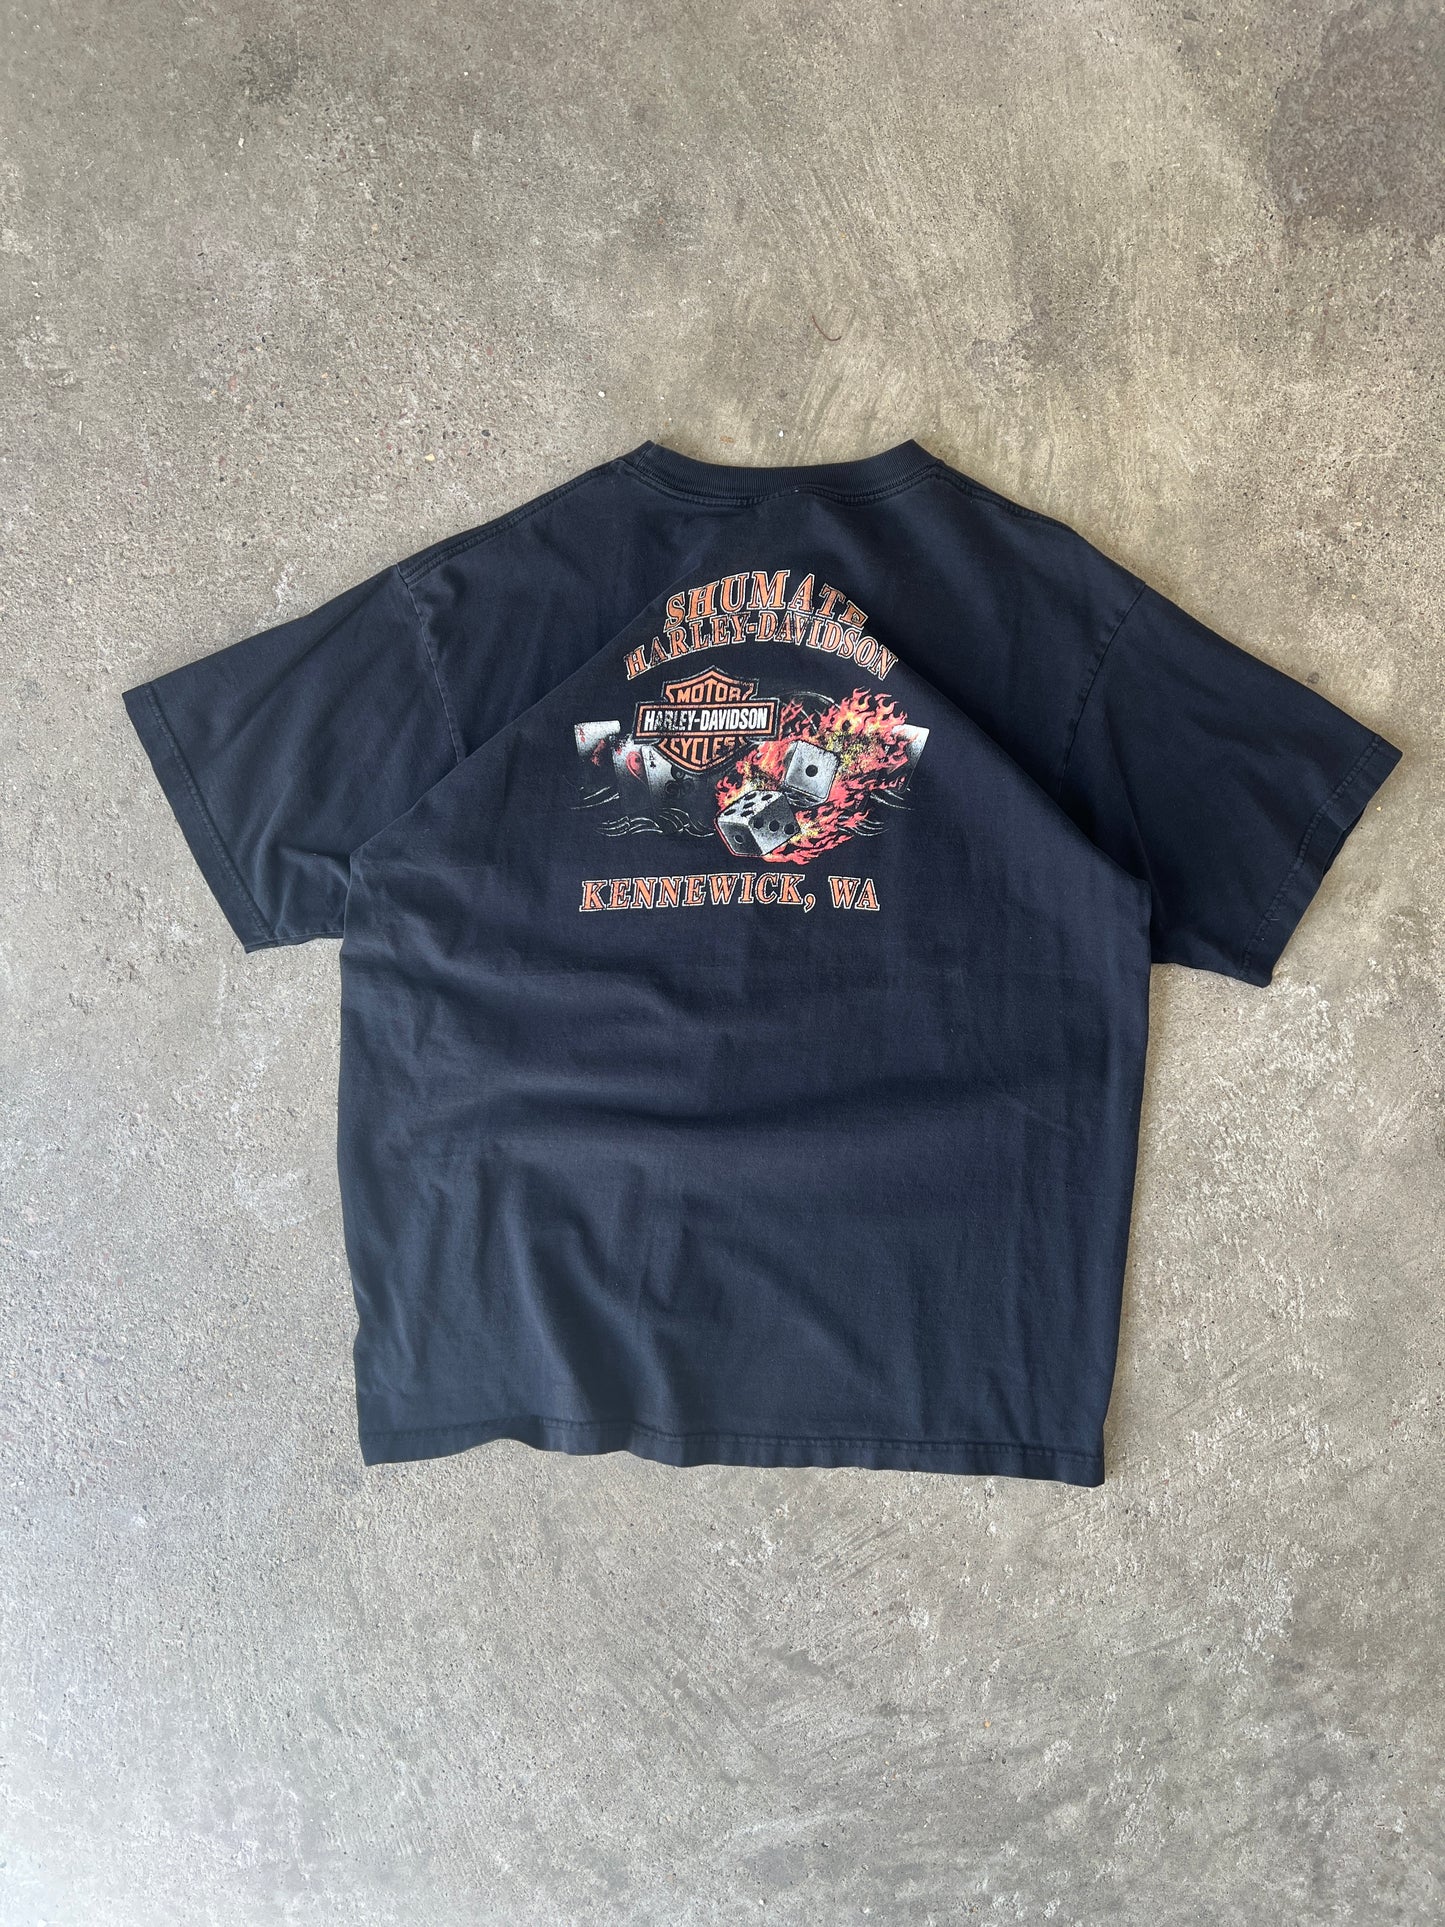 Vintage Harley Davidson Shirt - XL